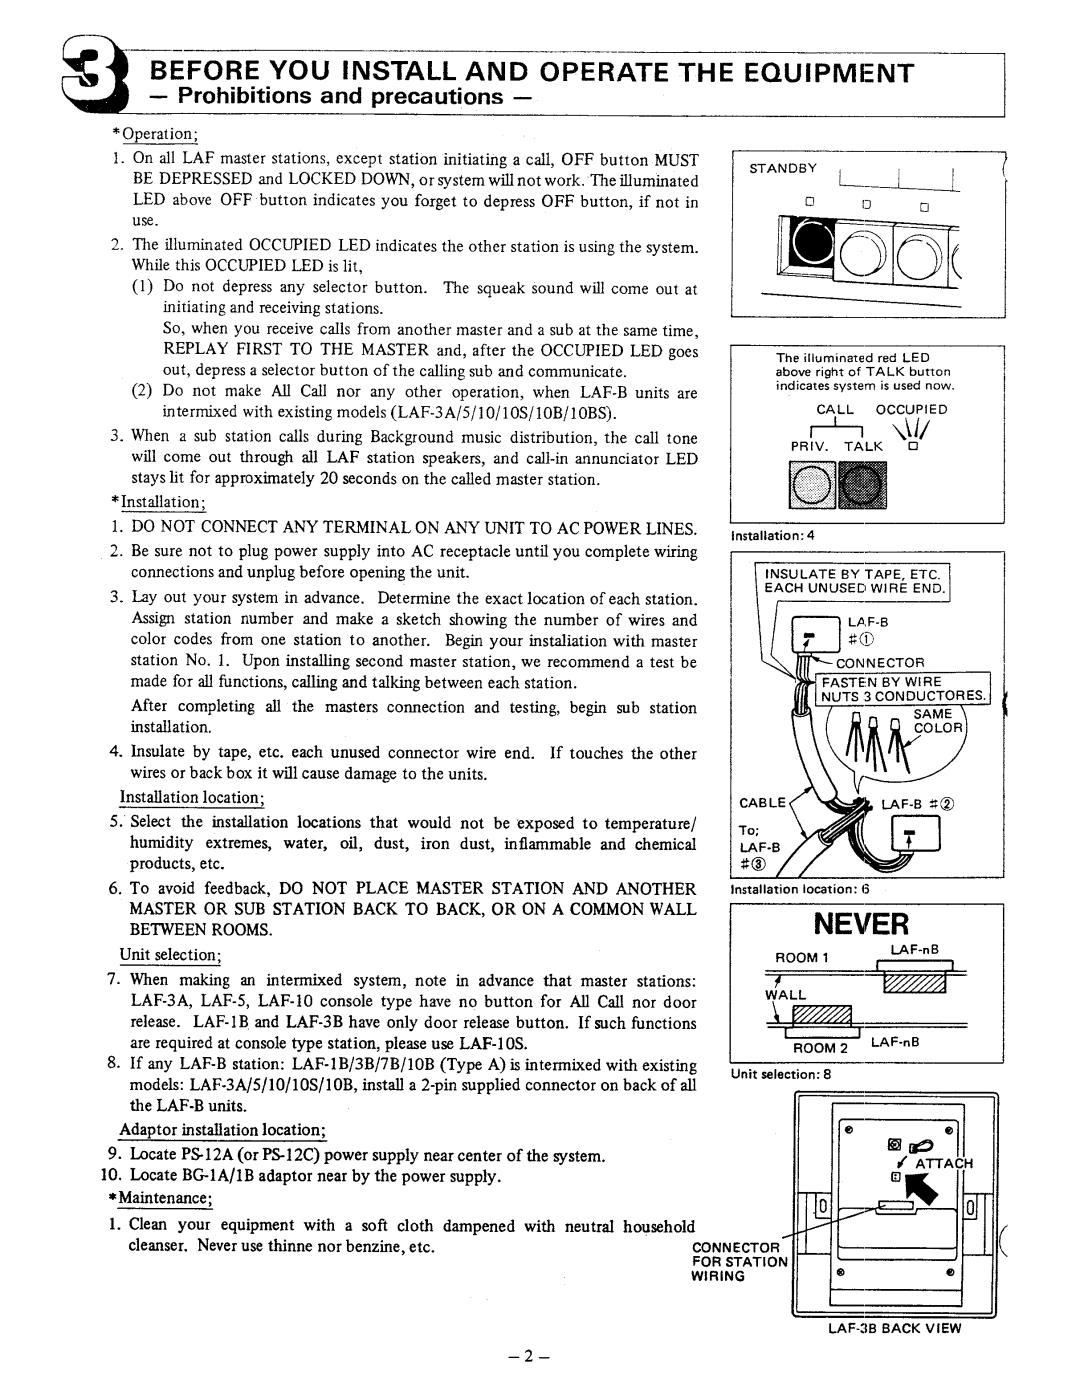 Aiphone LAF-3B manual 